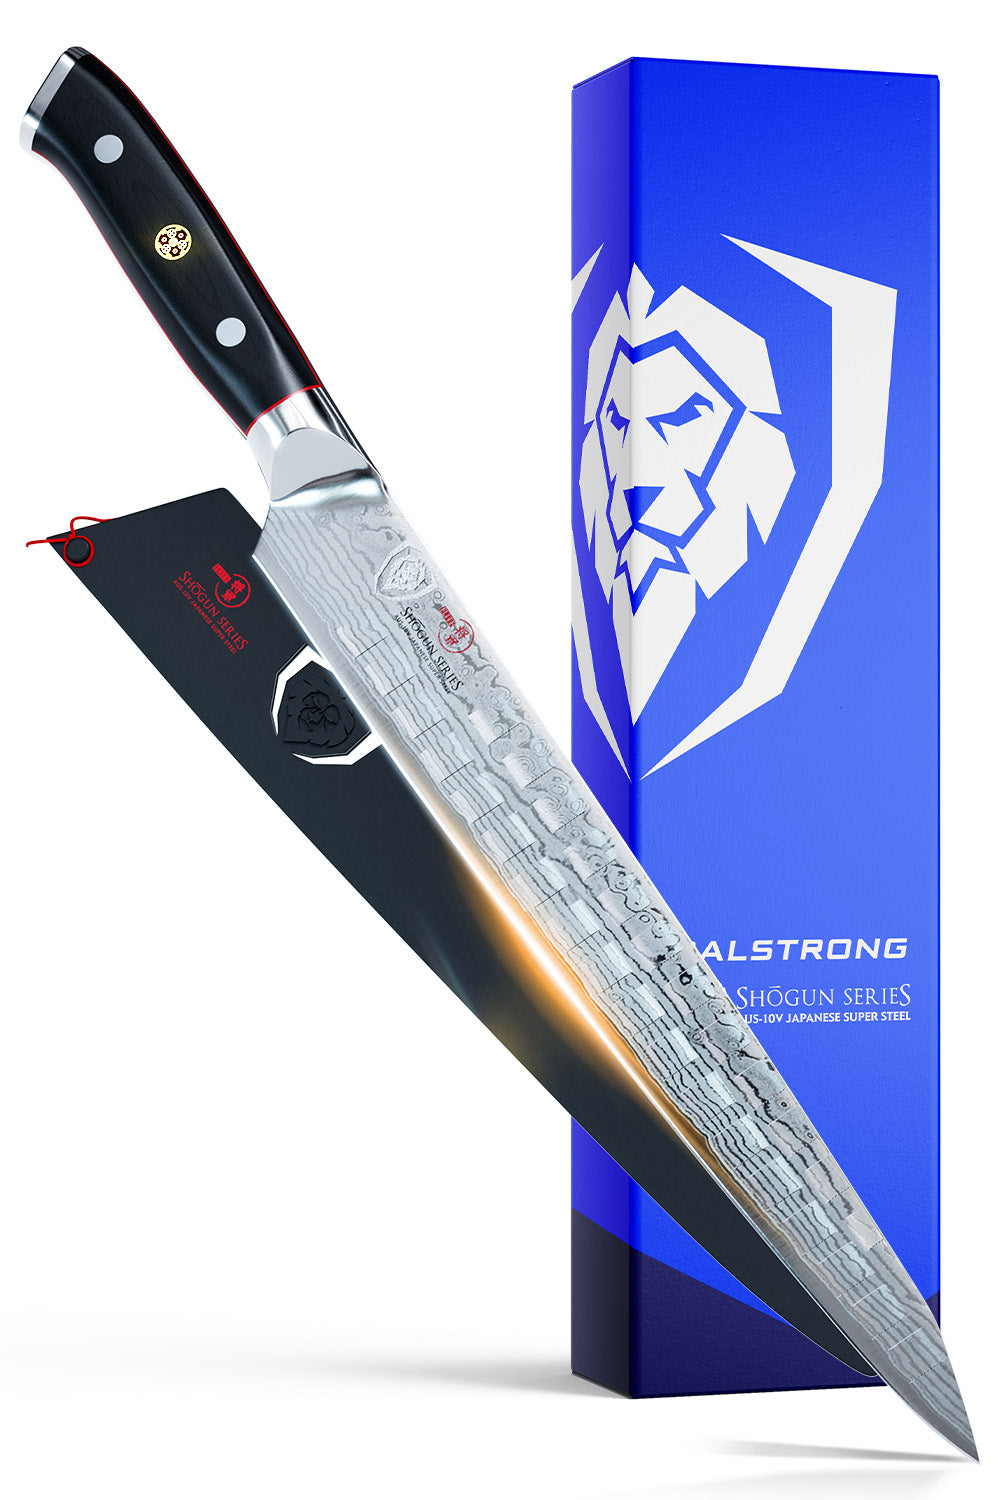 Sujihiki Slicing Knife 10.5" | Shogun Series | Dalstrong ©